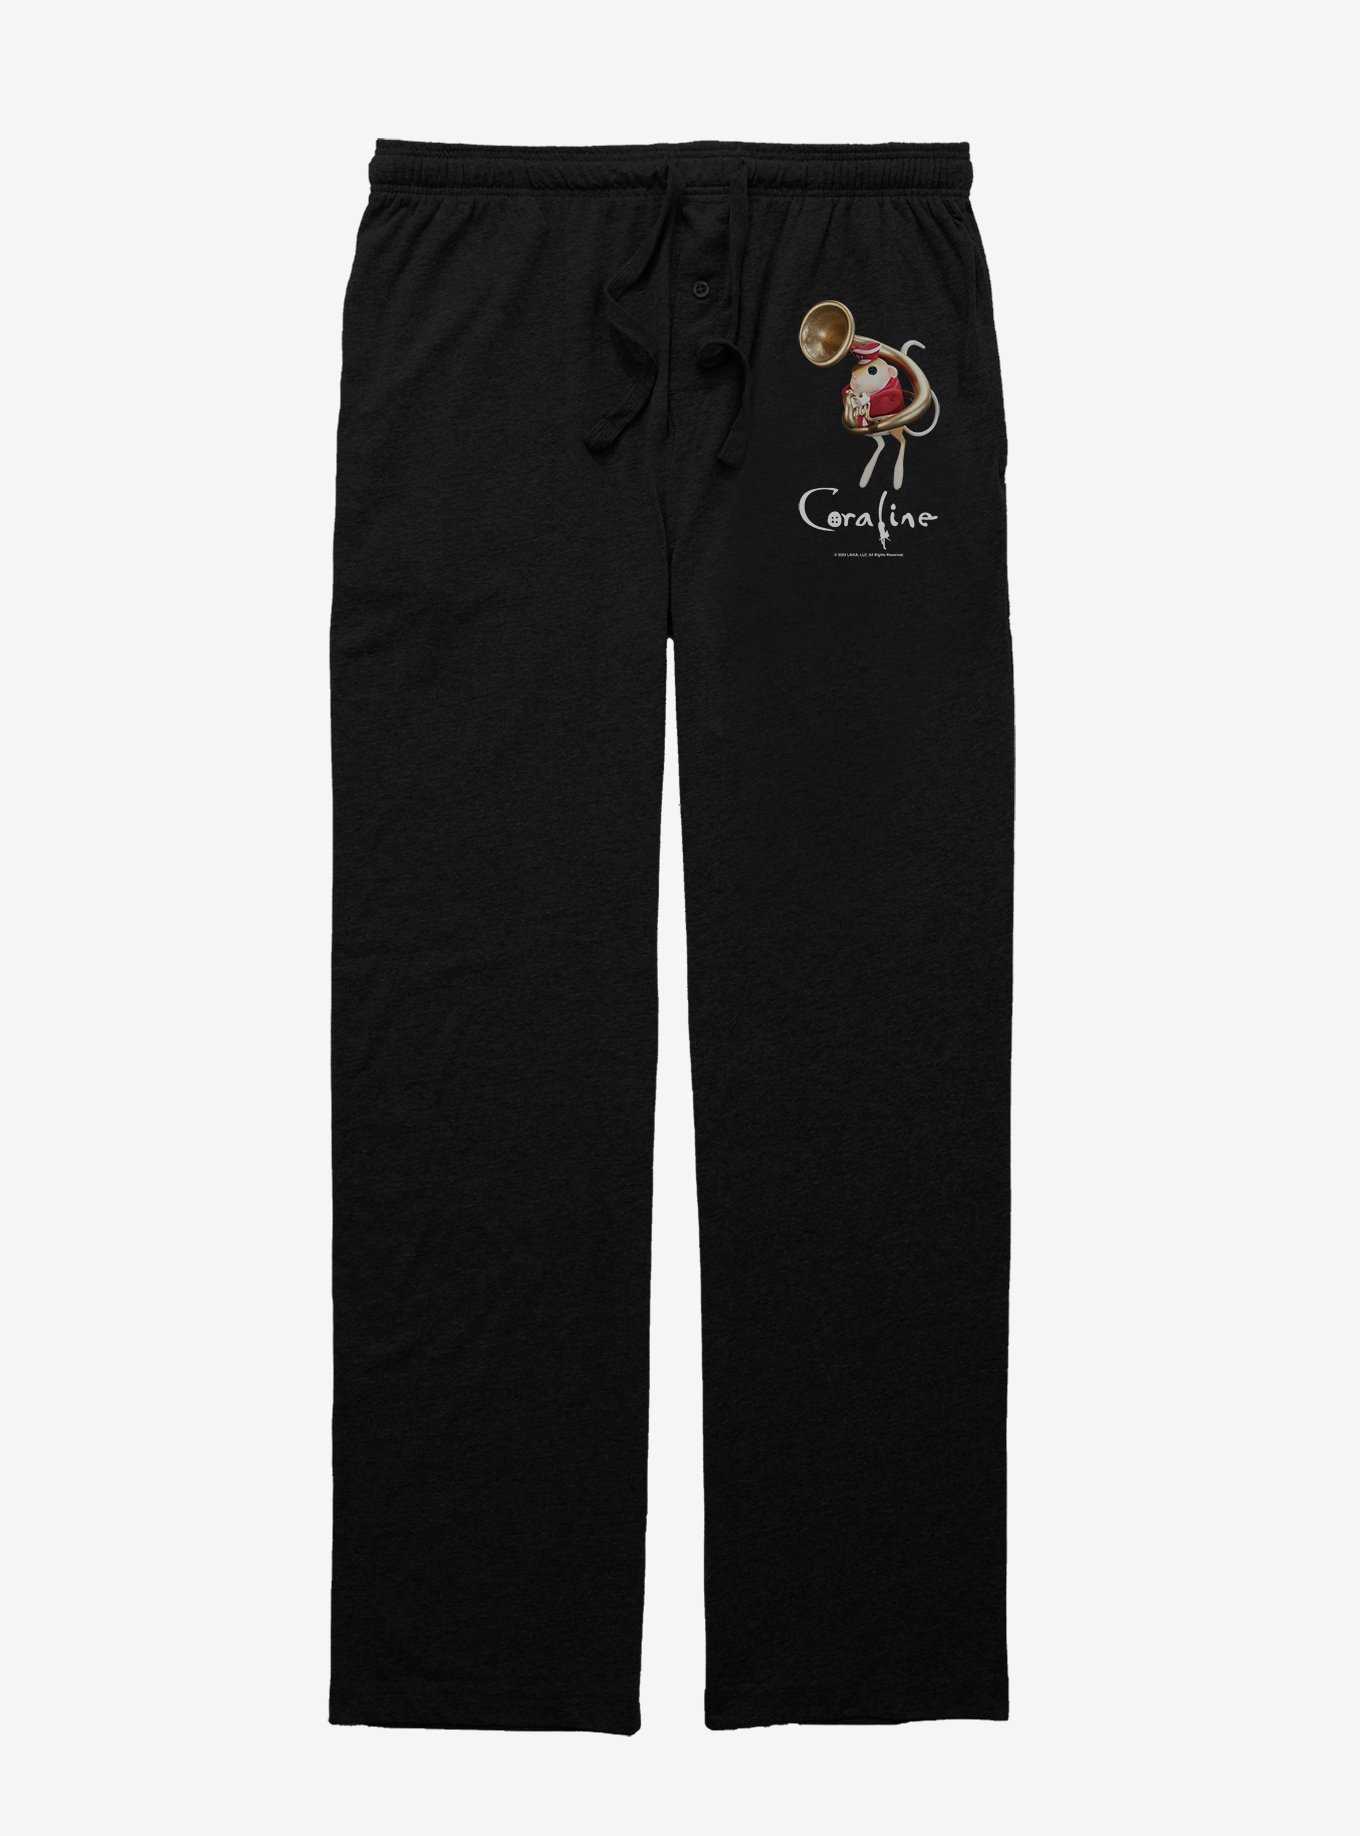 Coraline Circus Mouse Sousaphone Pajama Pants, , hi-res